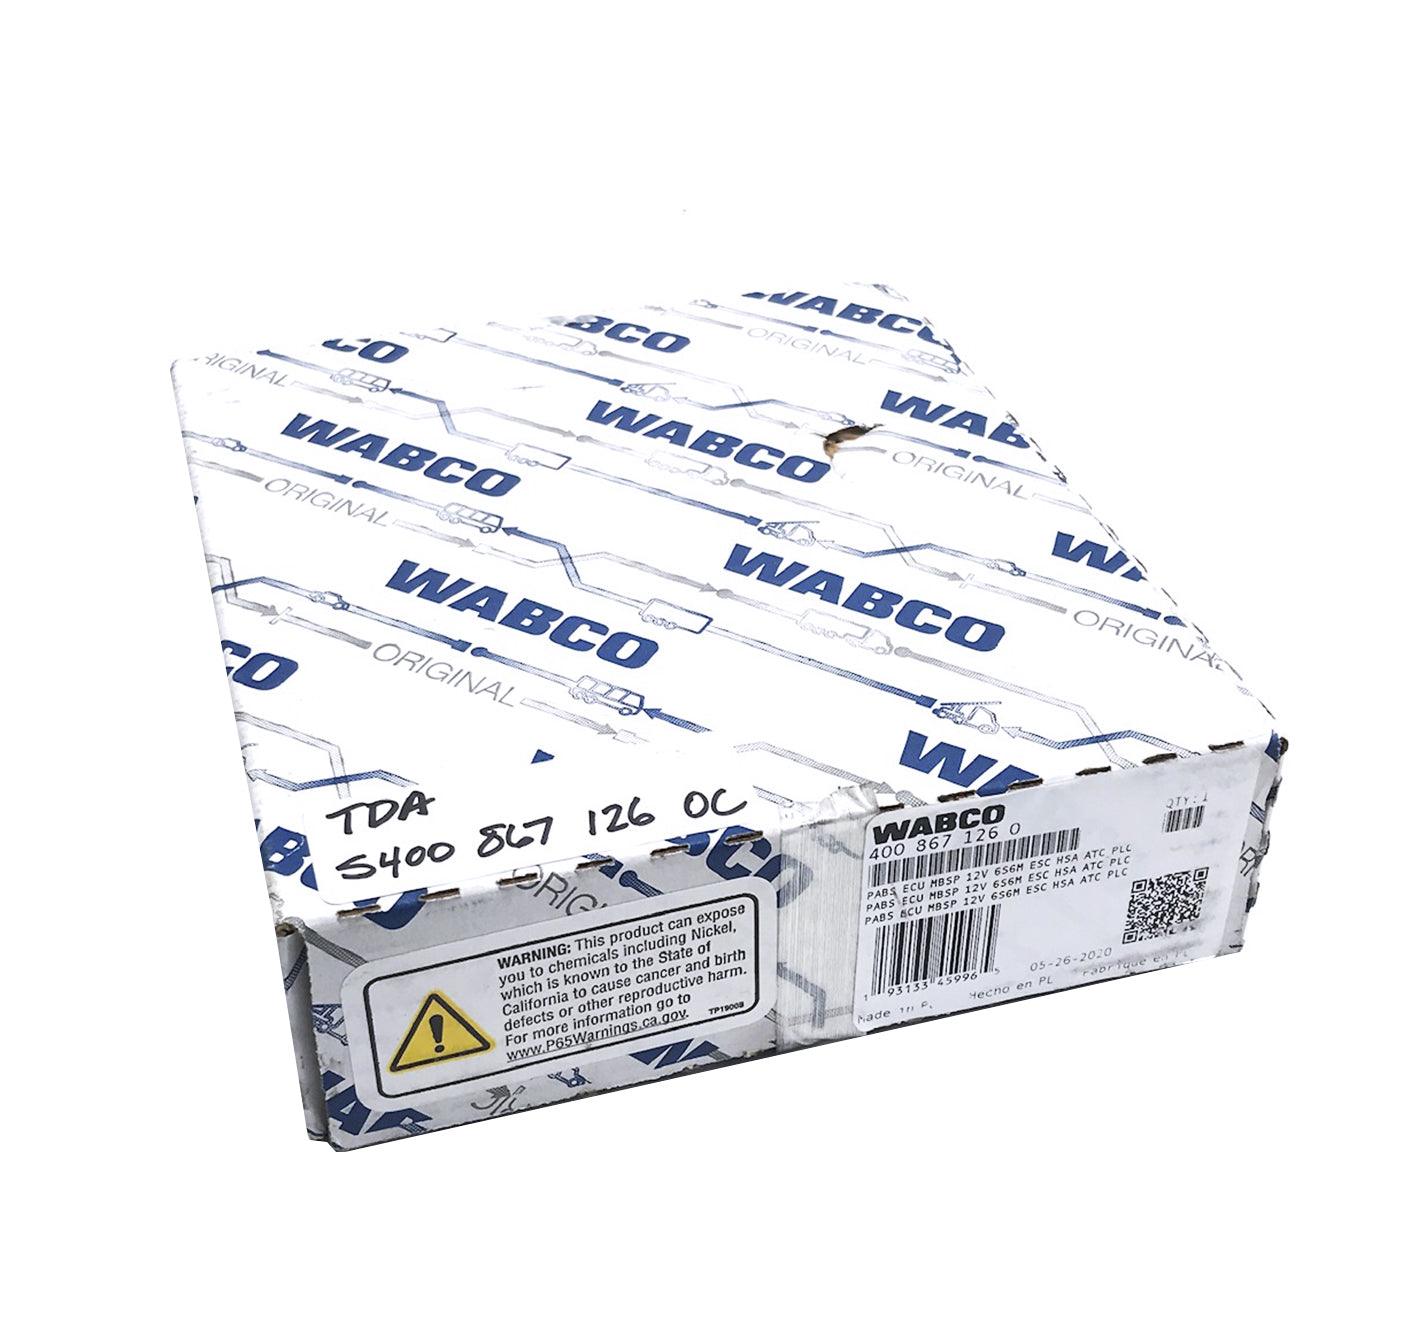 400 867 126 0 Genuine Wabco® Smarttrac Antilock Brakes - ADVANCED TRUCK PARTS